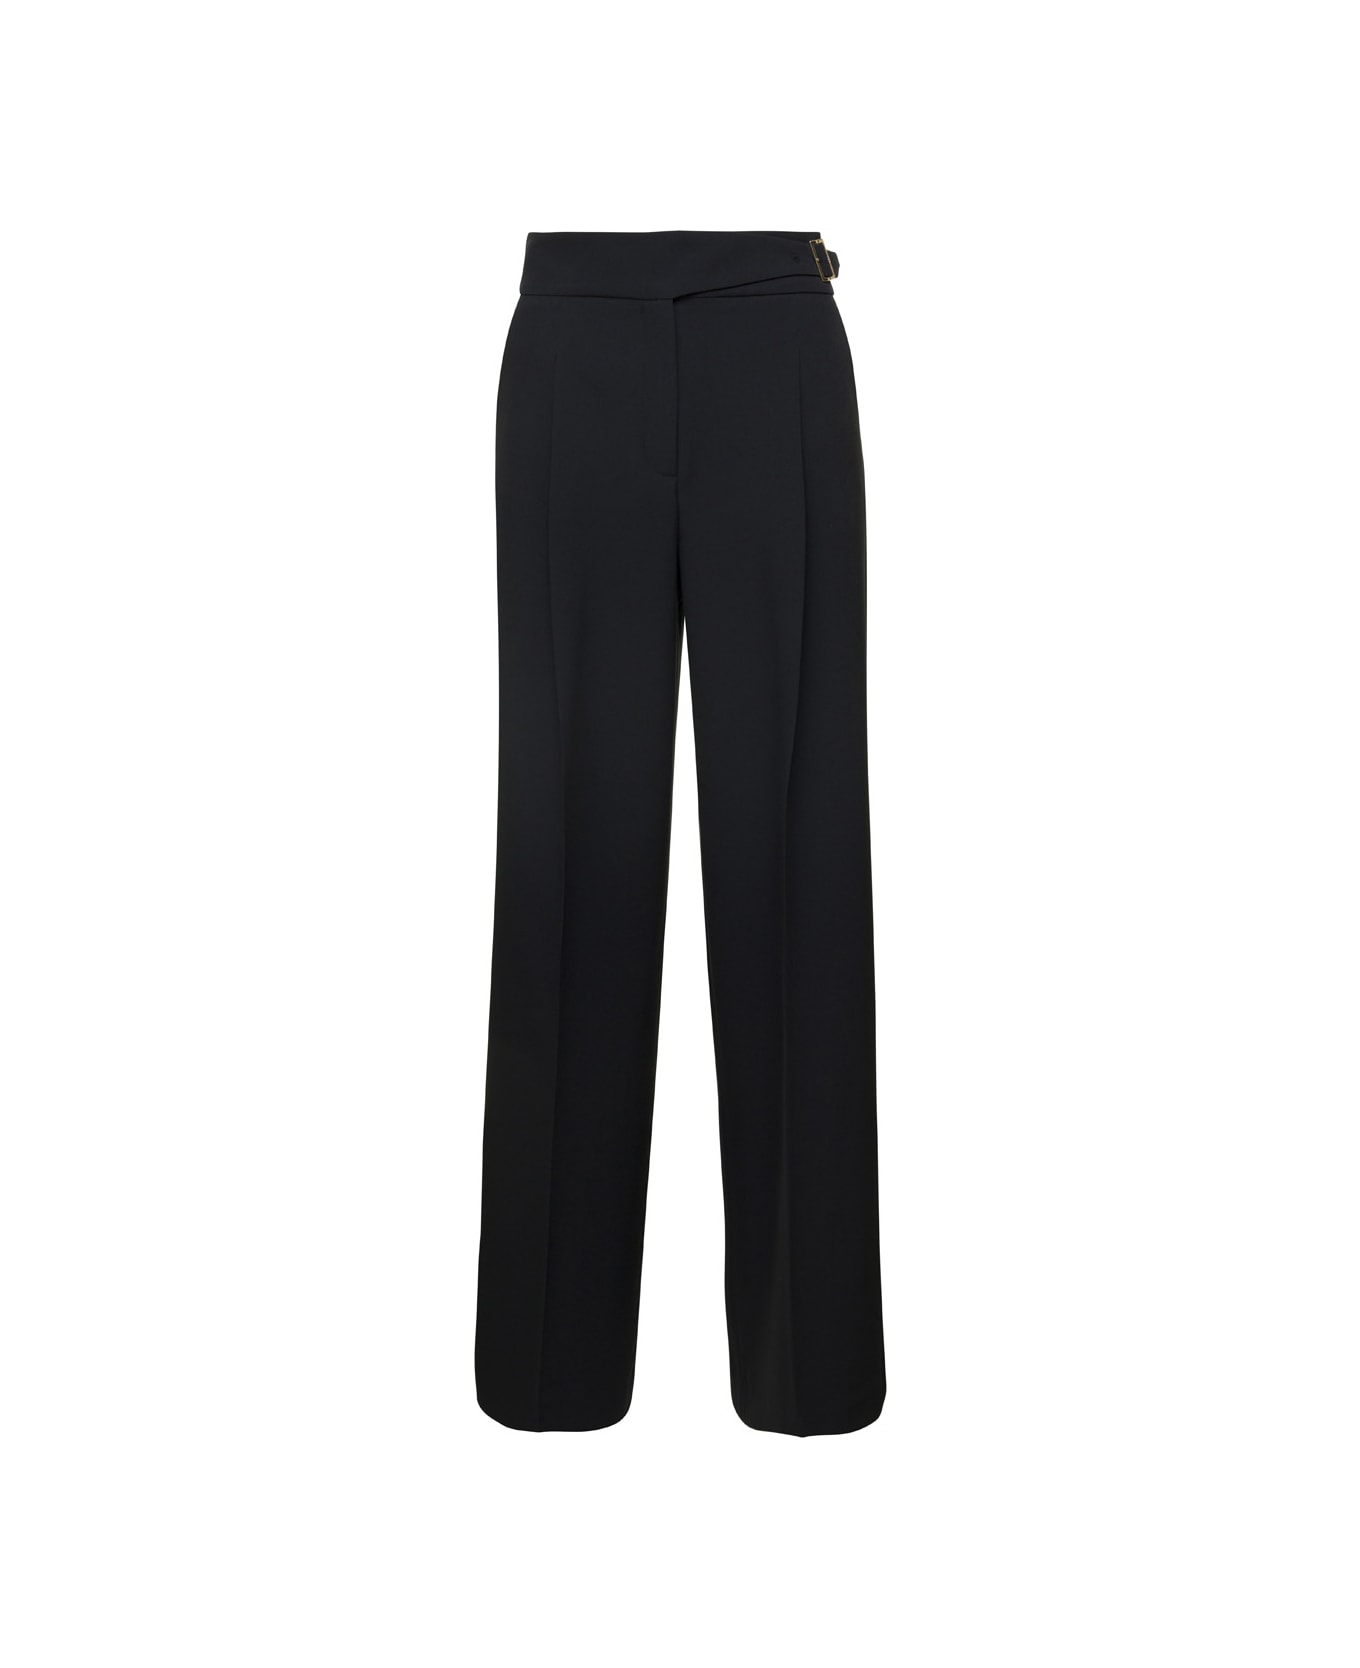 Liu-Jo Black Palazzo Pants With Darts In Stretch Technical Fabric Woman - Black